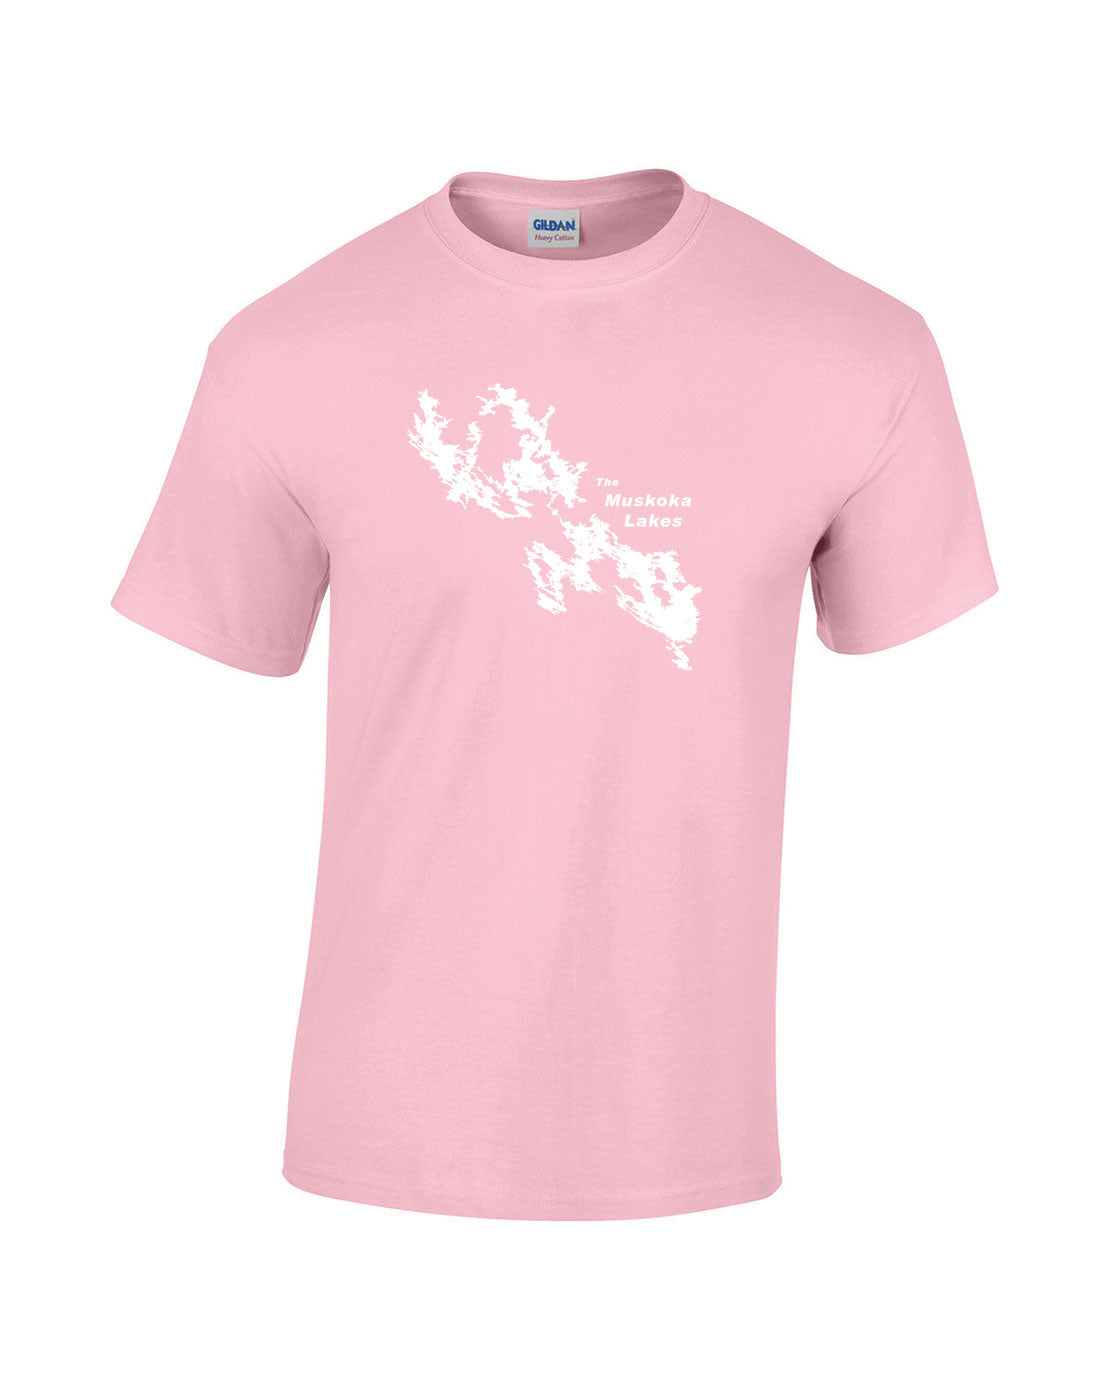 Muskoka Lakes T-Shirt